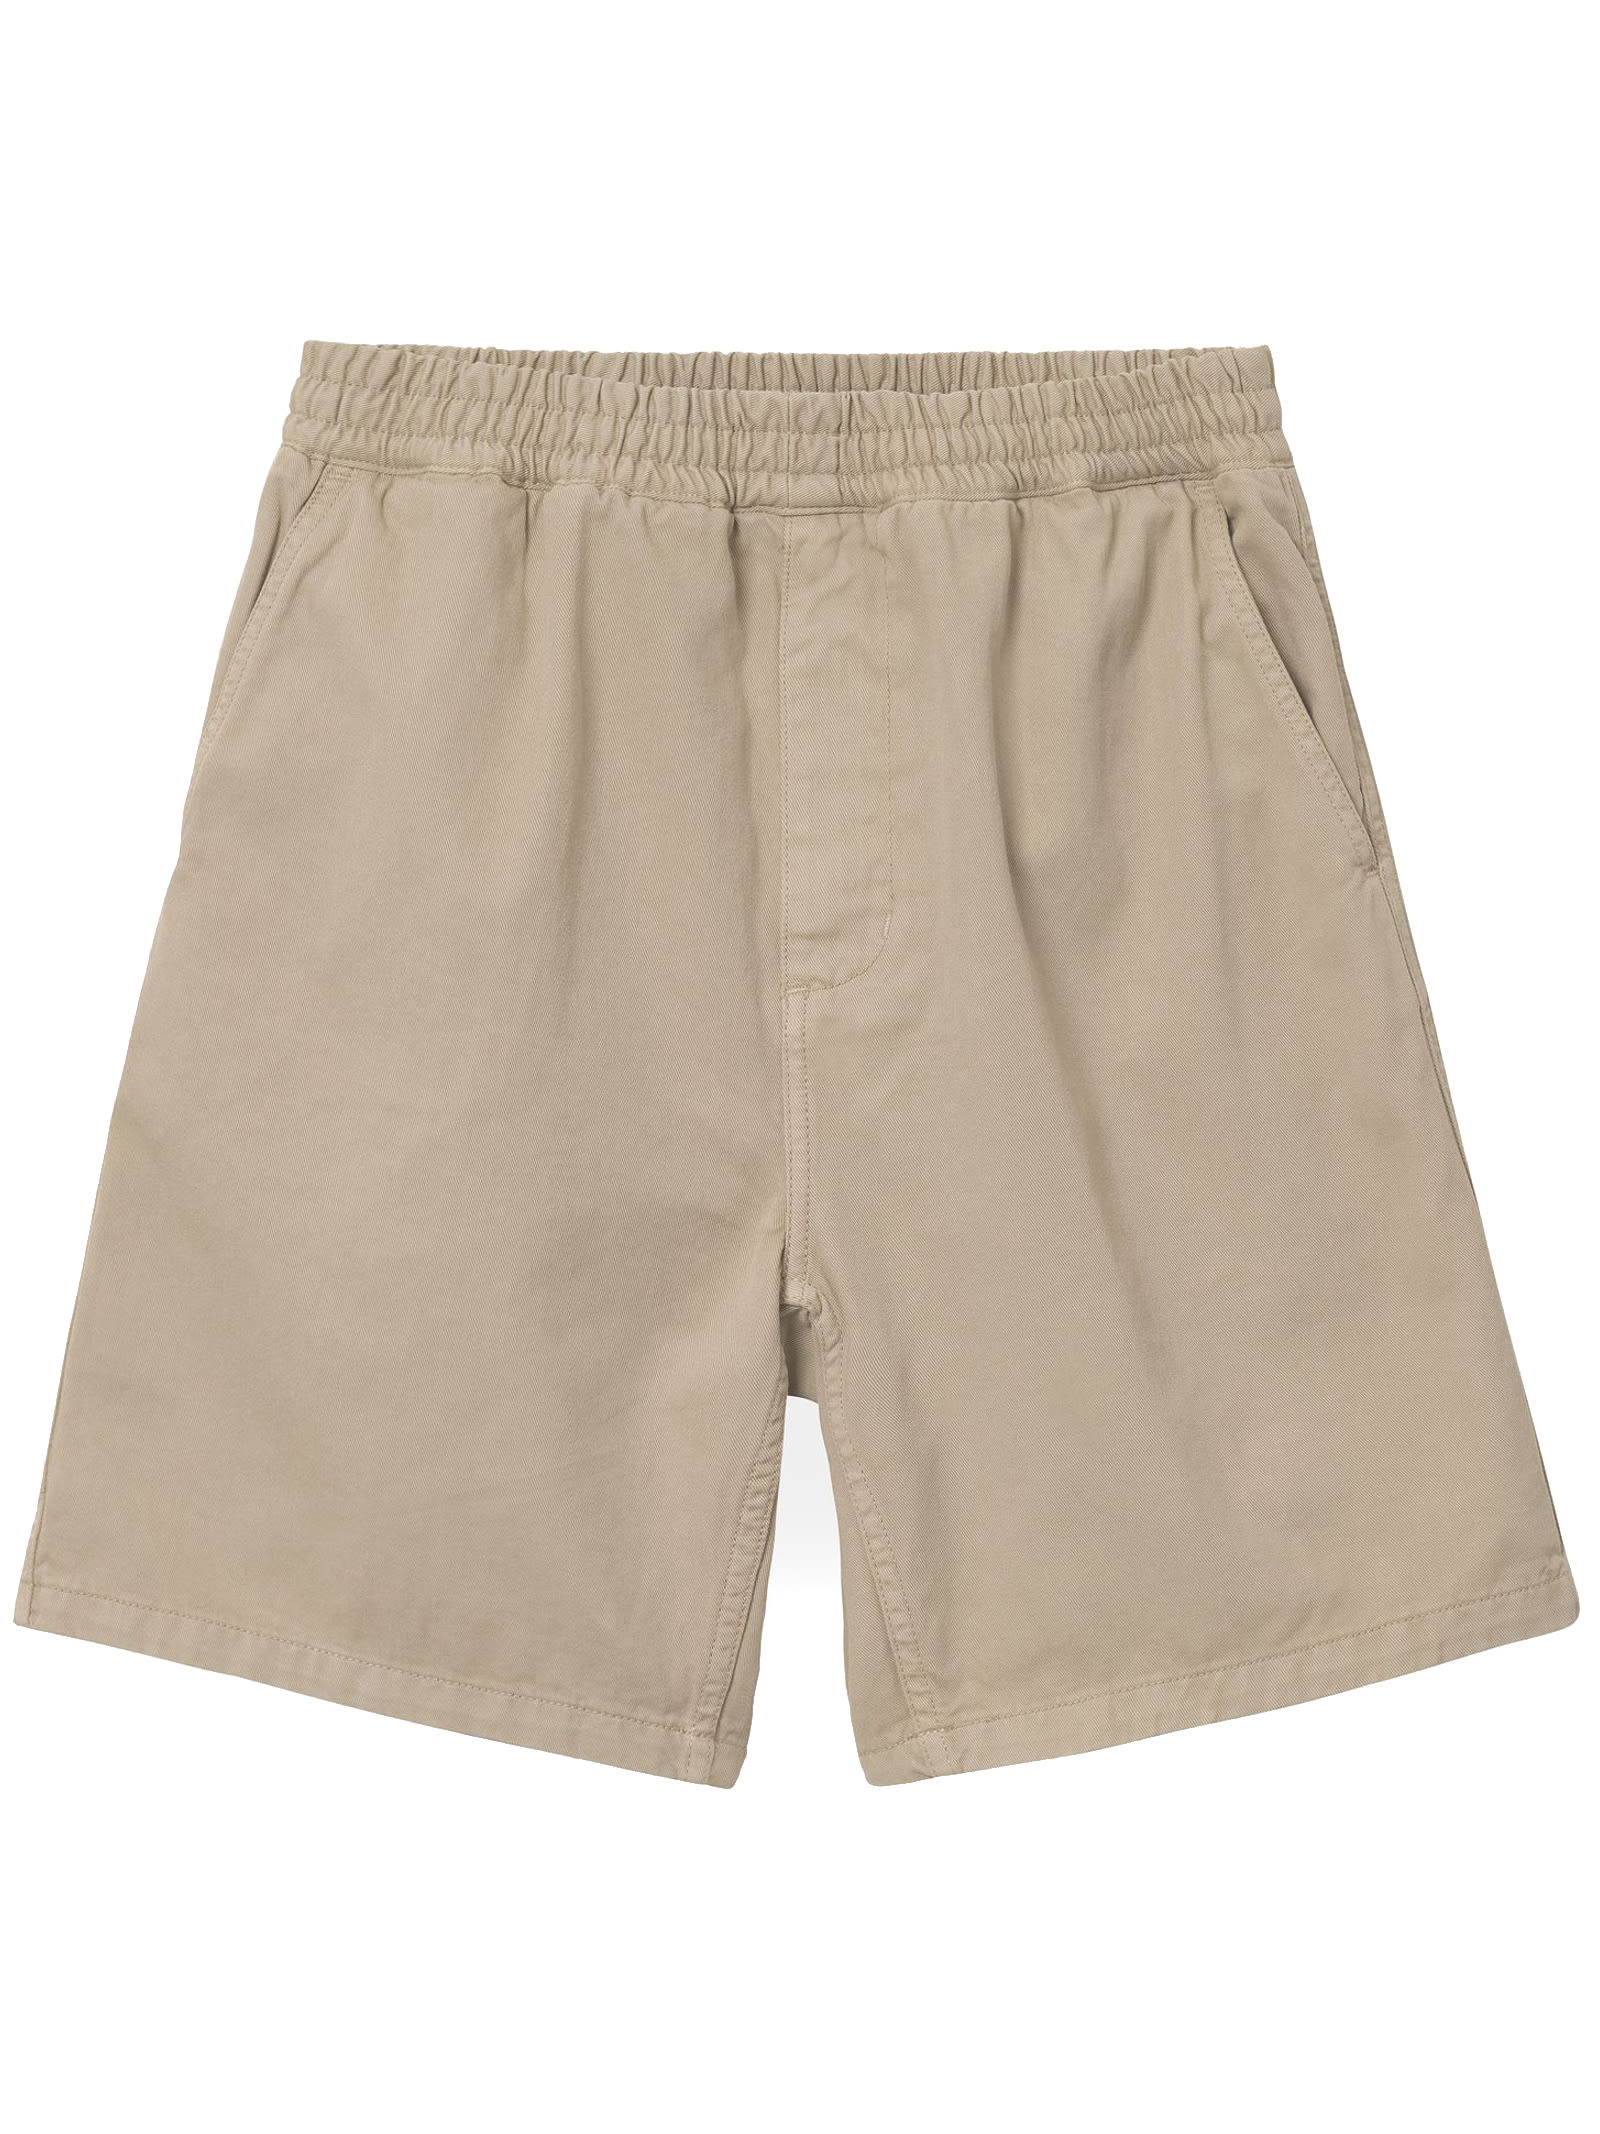 Carhartt Beige Cotton Shorts